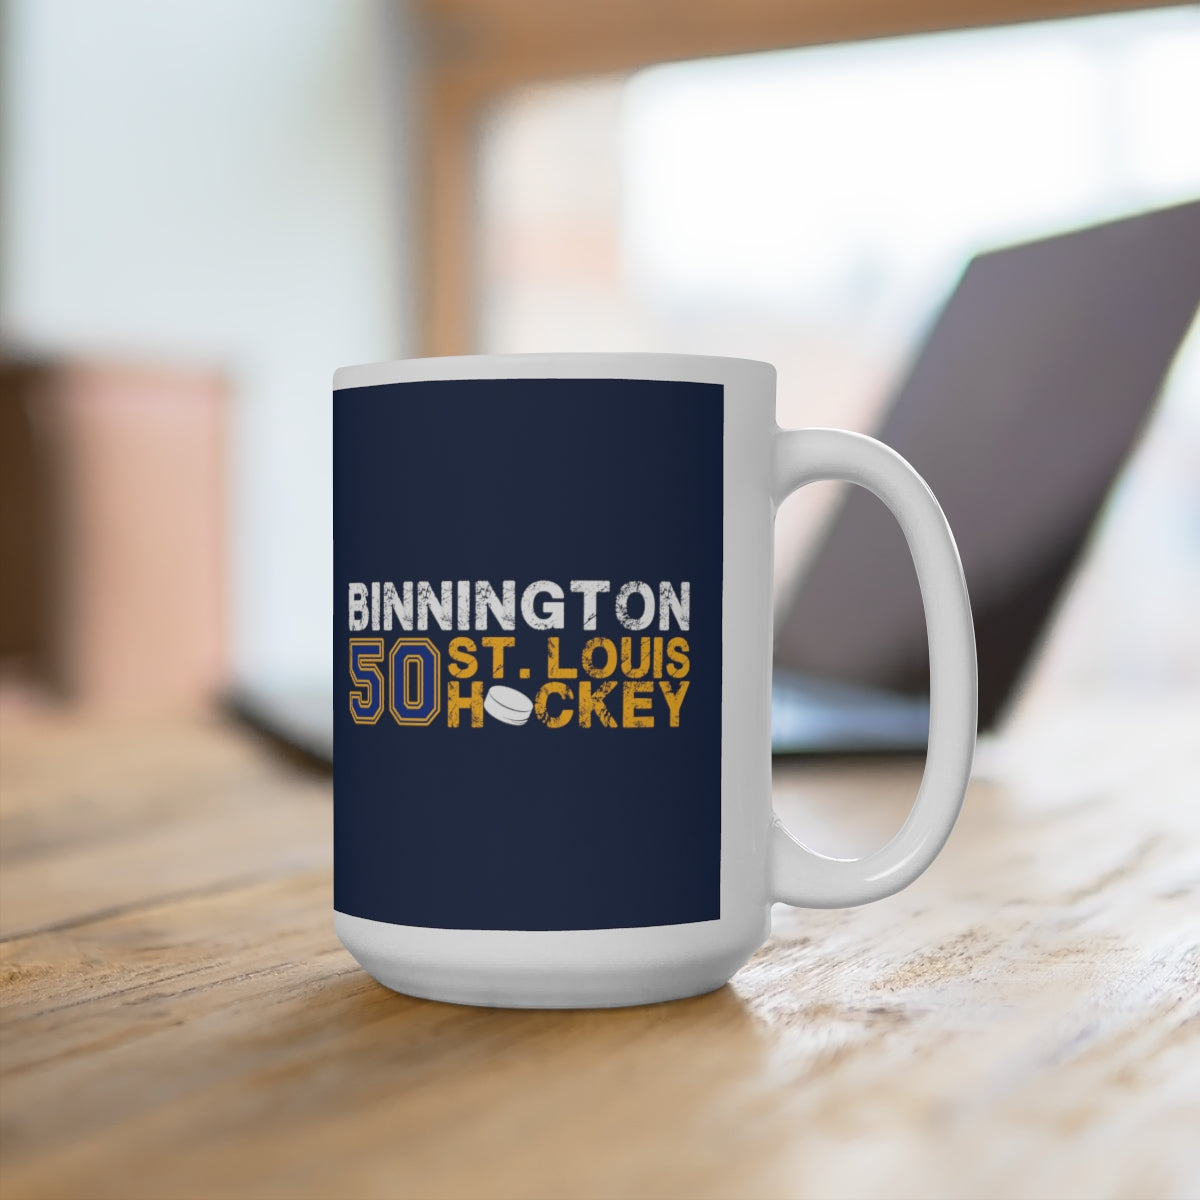 Binnington 50 St. Louis Hockey Ceramic Coffee Mug In Navy, 15oz